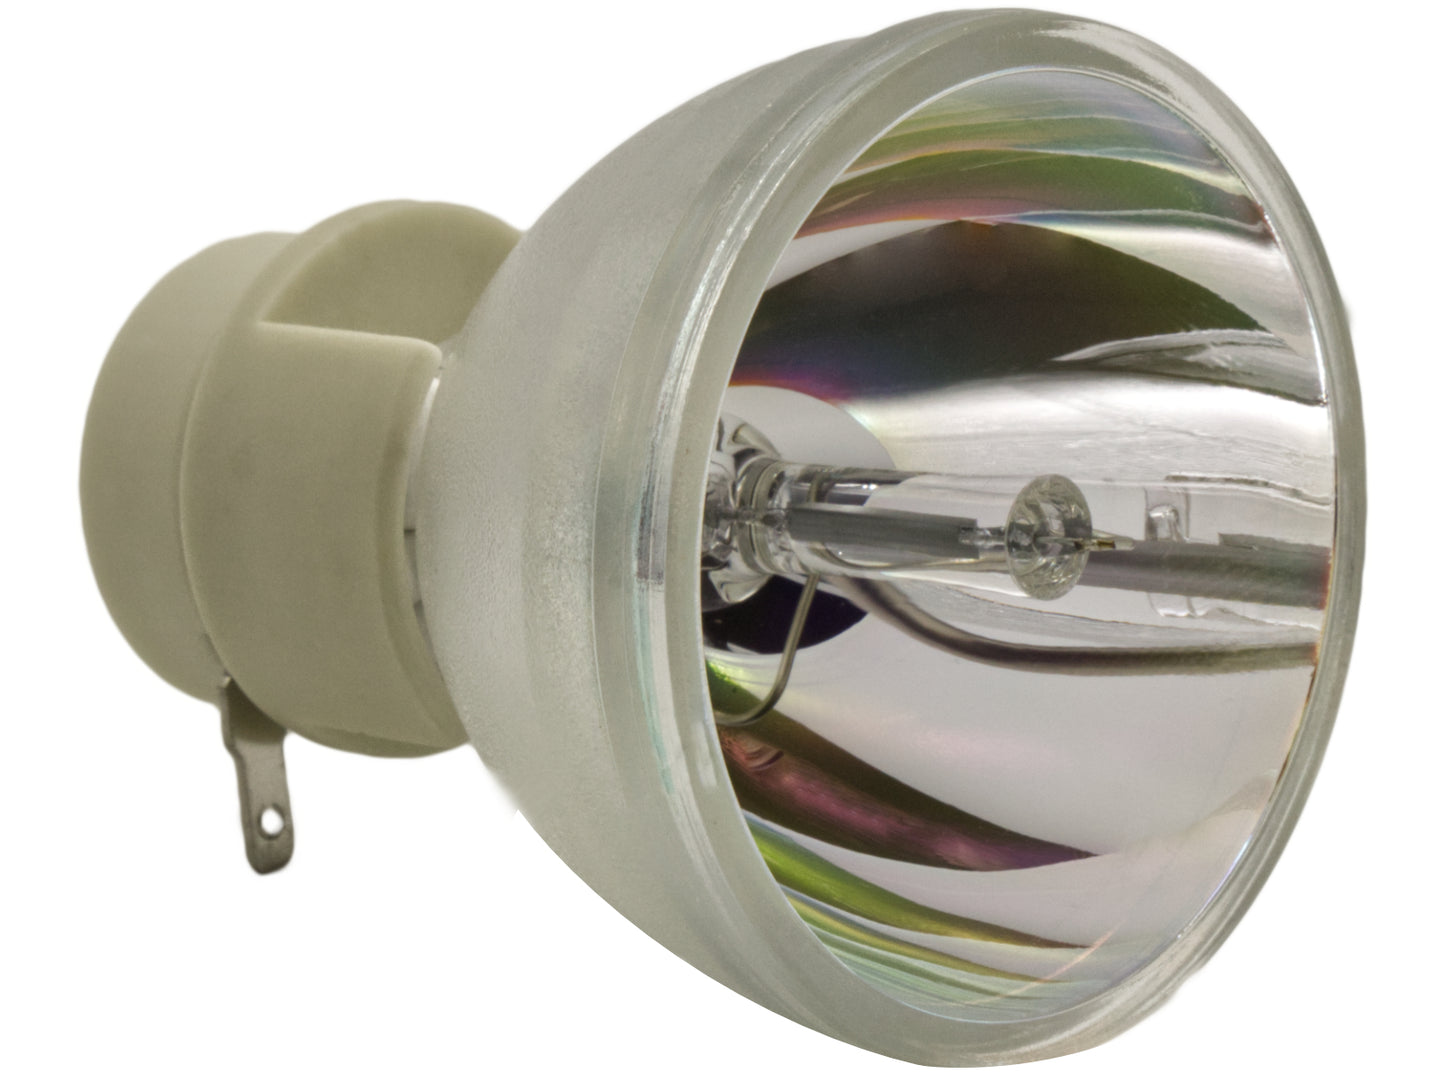 azurano BLB1 Beamerlampe für OSRAM PVIP 230/0.8 E20.8 Ersatzlampe für diverse Projektoren von ACER, BENQ, MITSUBISHI, NEC, OPTOMA, SMART BOARD, PROMETHEAN, THEMESCENE, 230W - Bild 2